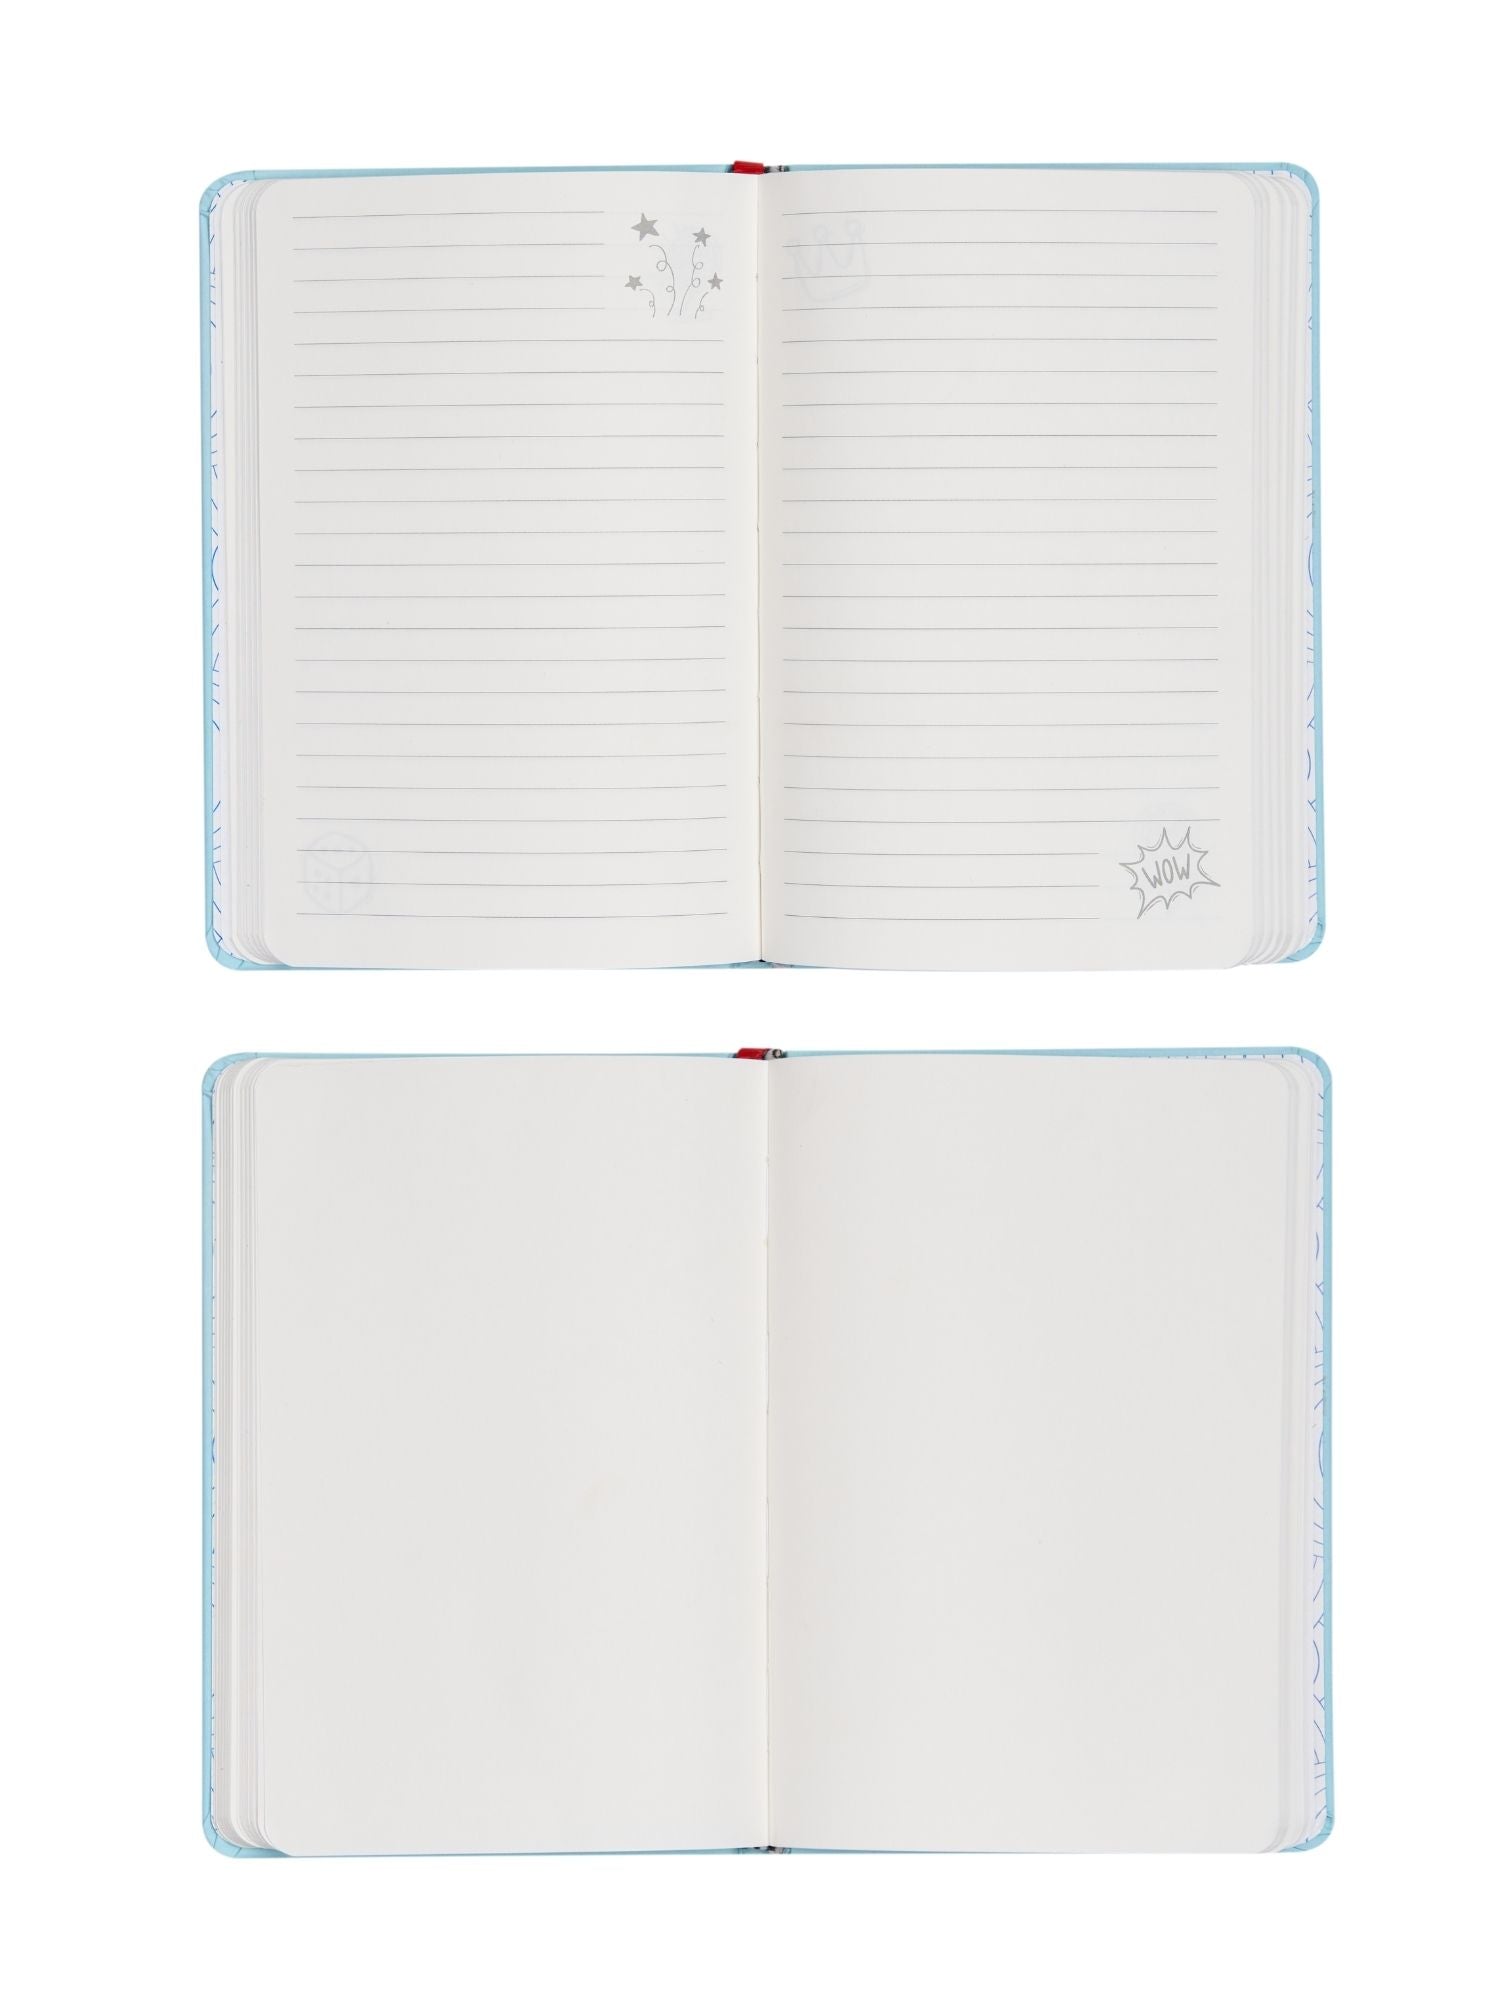 Doodle Initial I Stripes Theme Premium Hard Bound B6 Notebook Diary